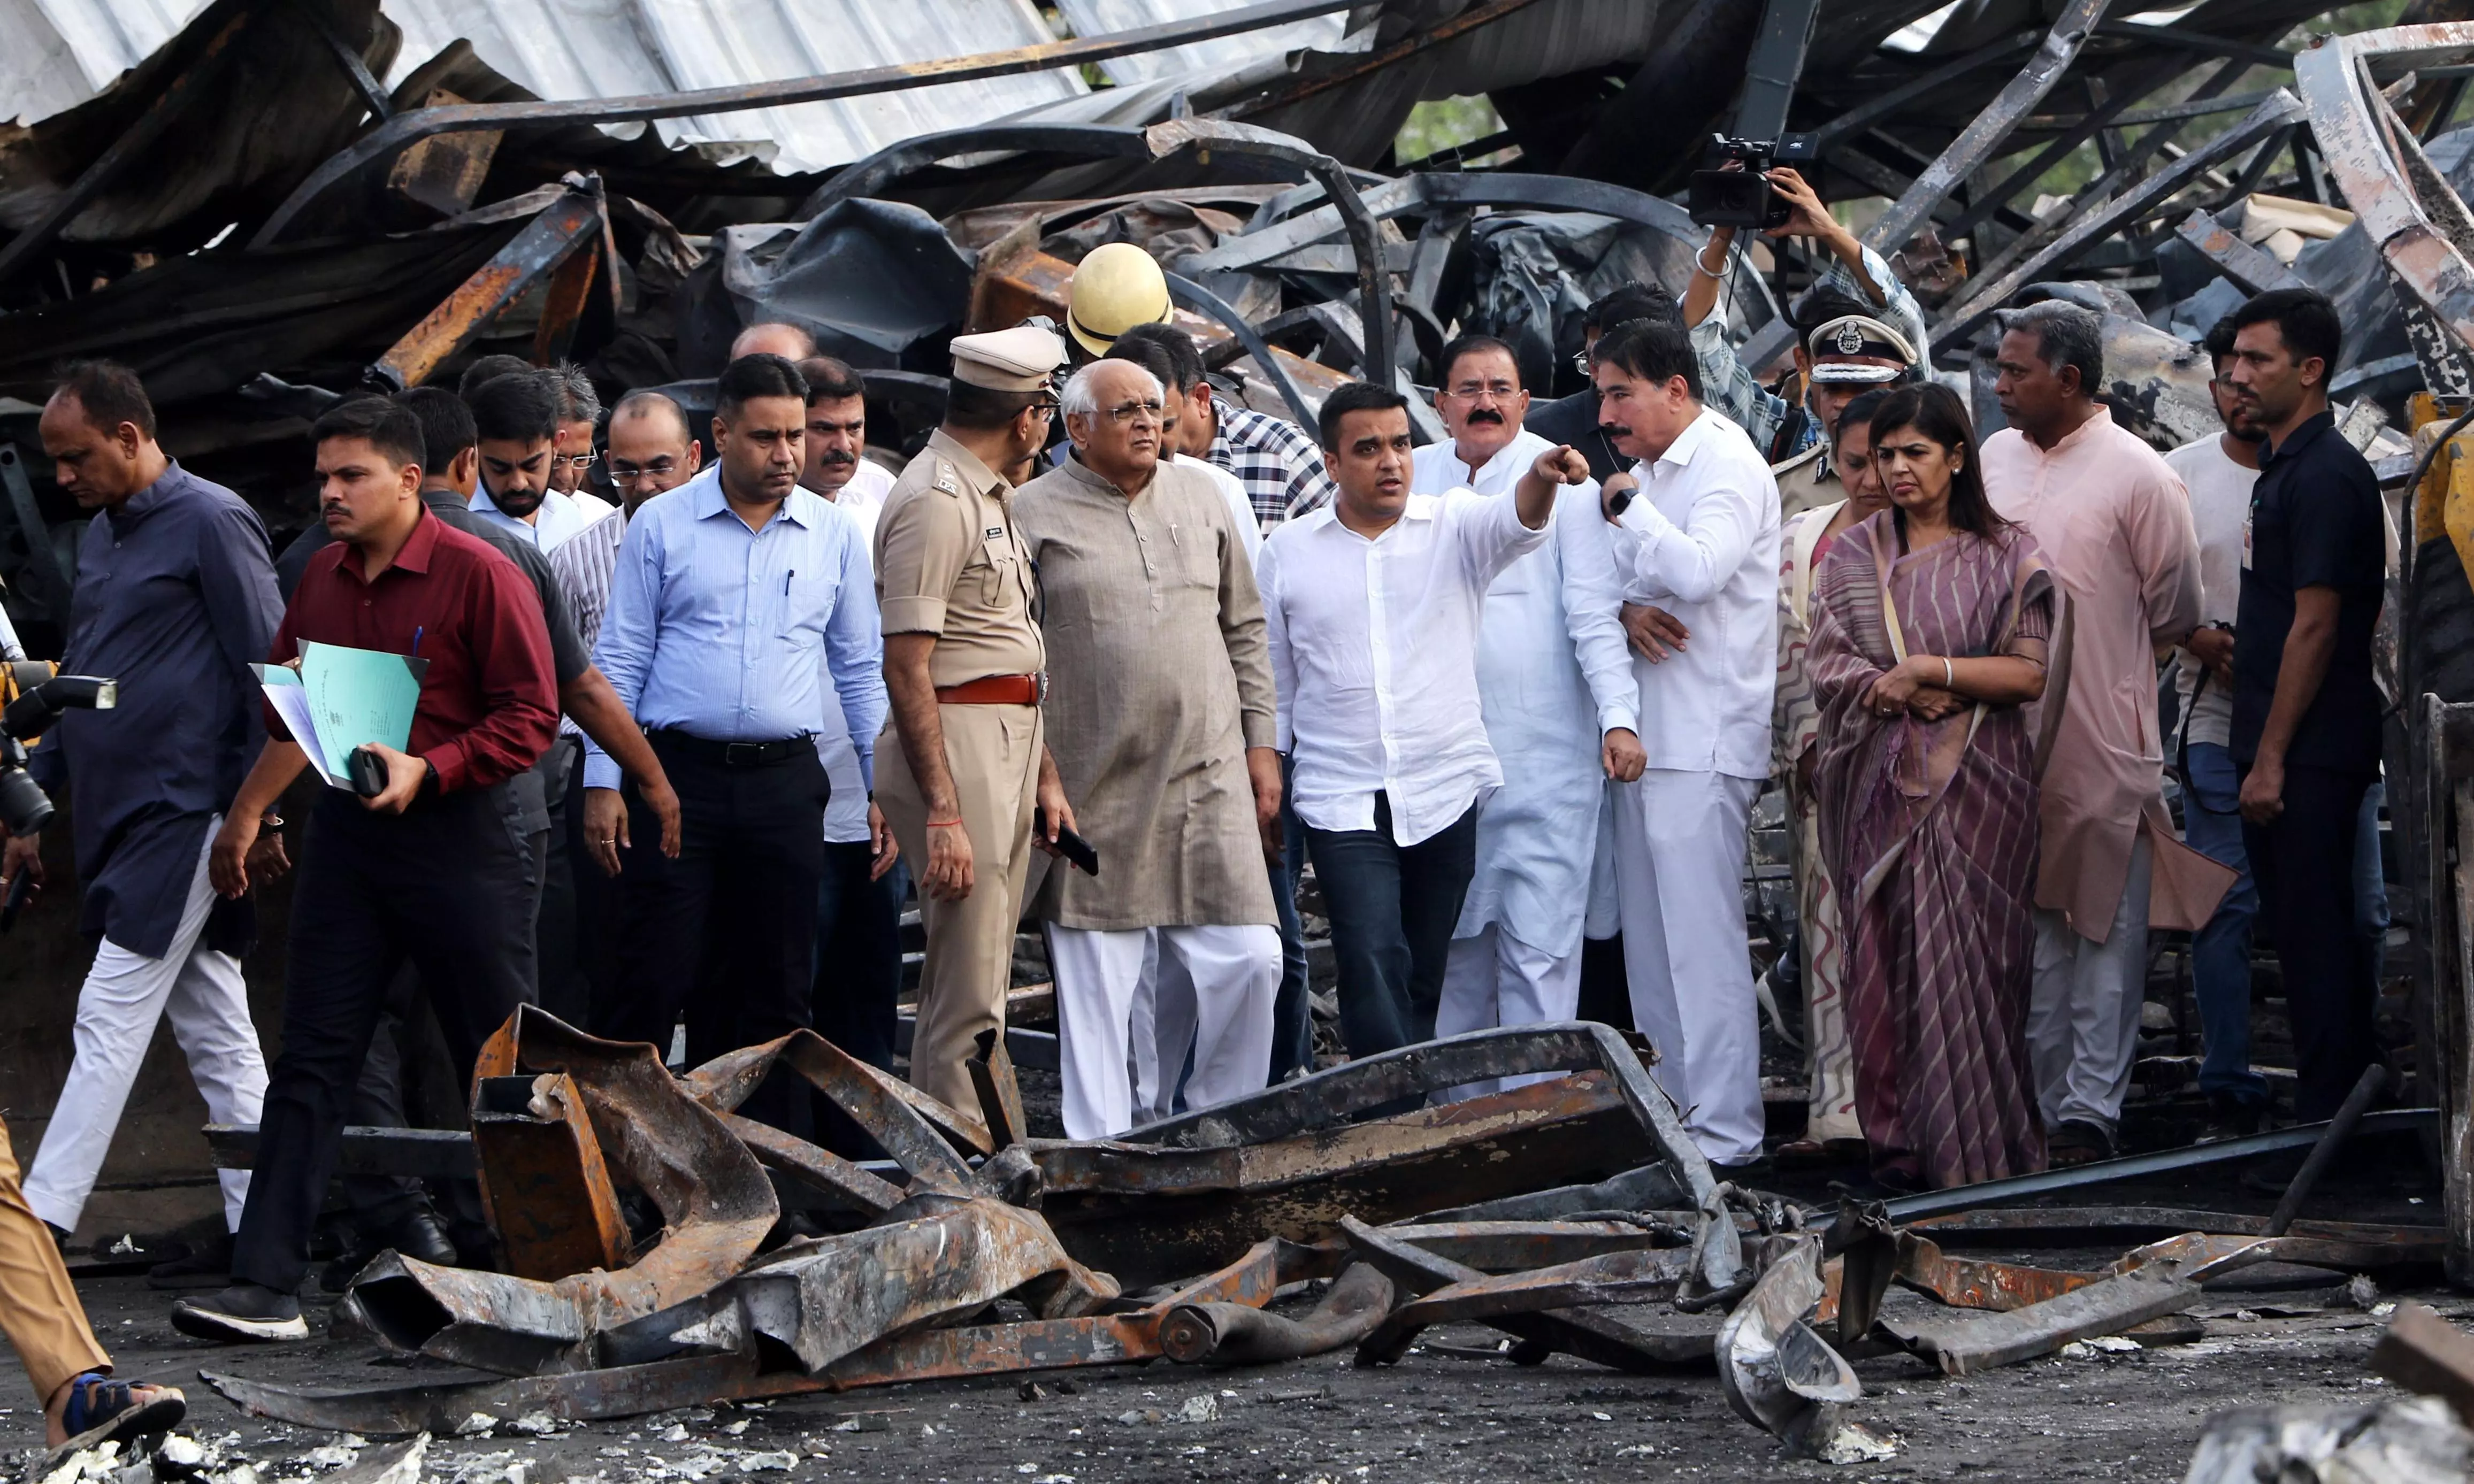 Rajkot game zone fire: PM Modi extends Rs 2 lakh ex gratia to victims’ kin